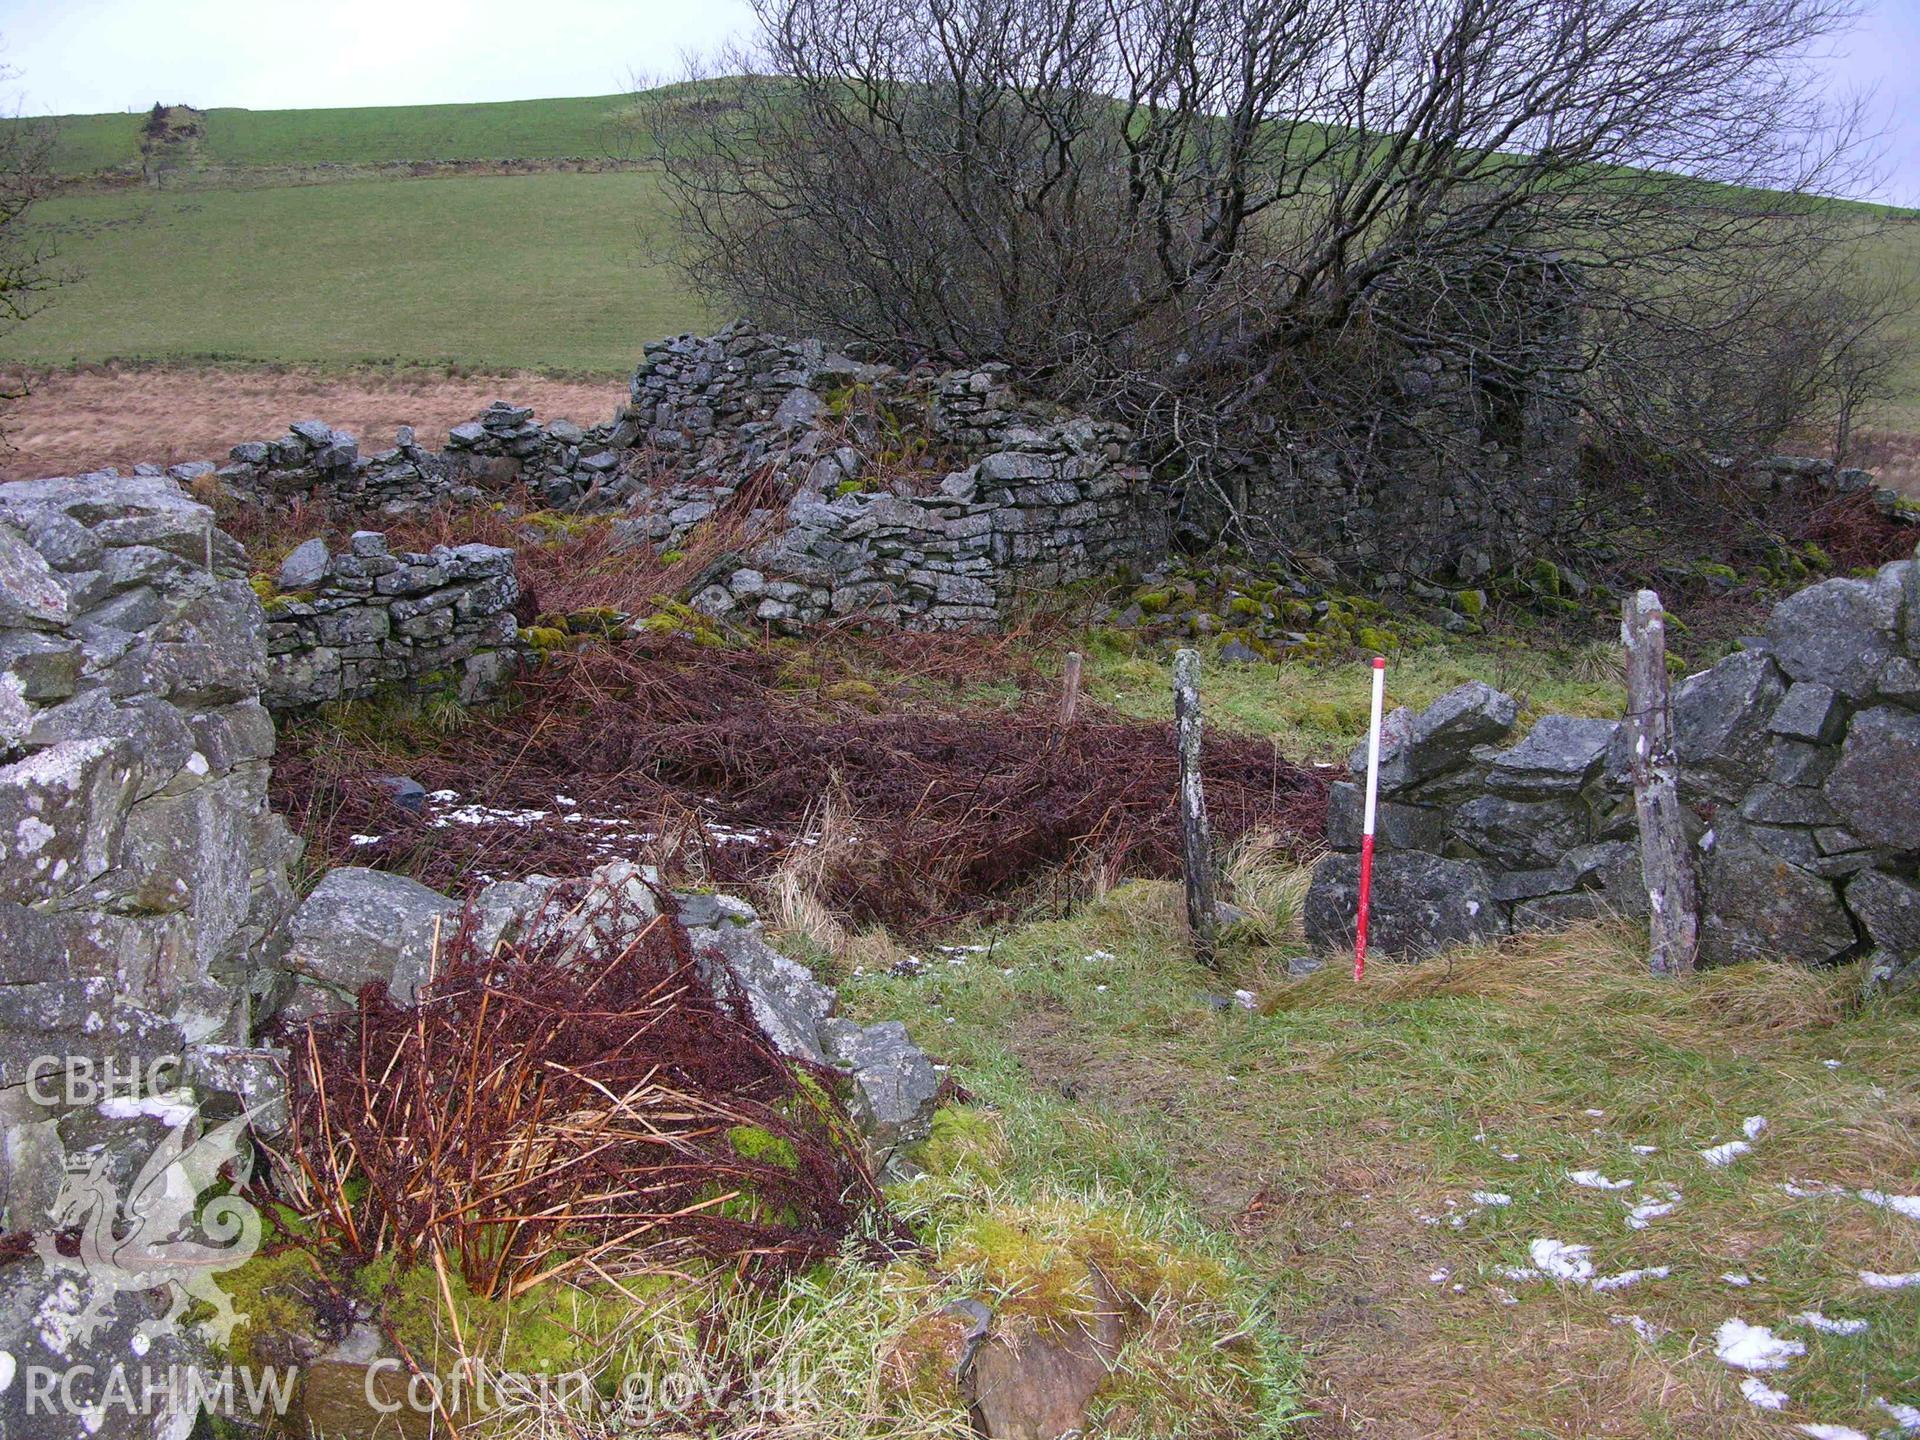 Colour digital photograph showing view of Carneddau Farmstead - part of archaeological desk based assessment for Esgair Cwmowen, Carno (CAP Report 549).